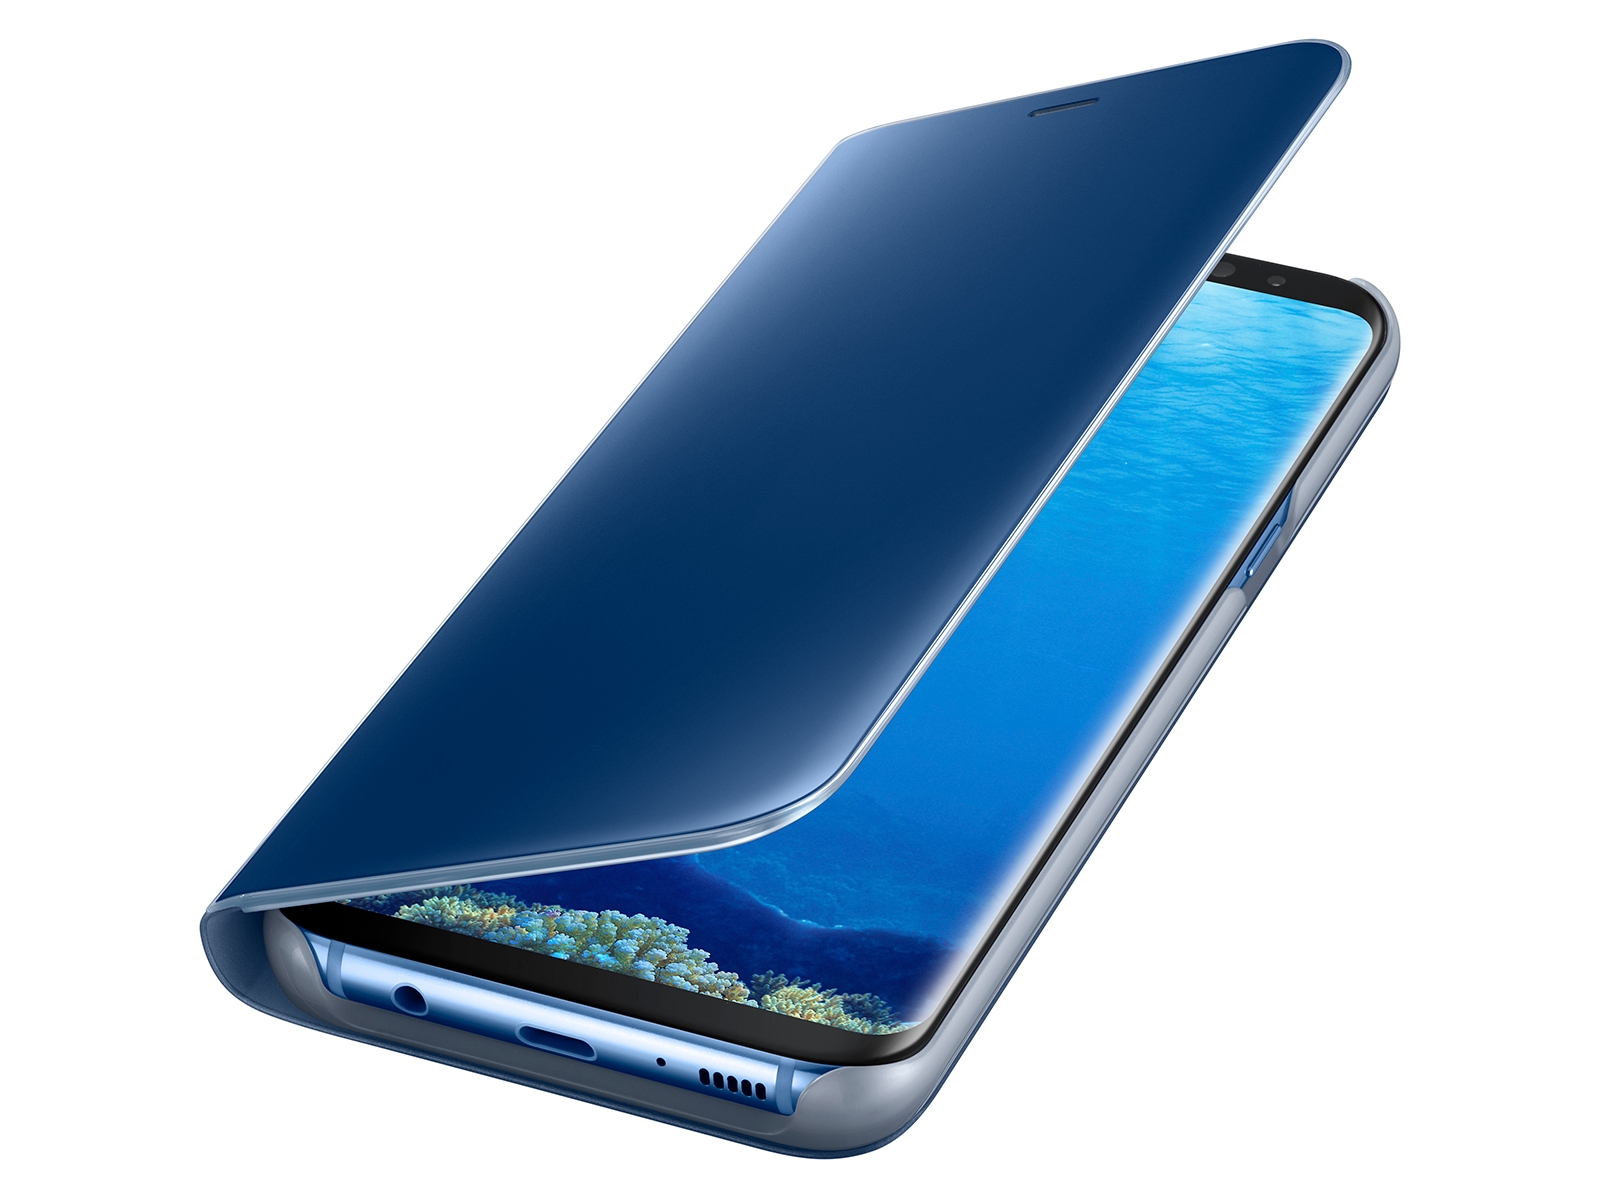 Galaxy S8+S-View Flip Cover, Blue - EF-ZG955CLEGUS | Samsung US